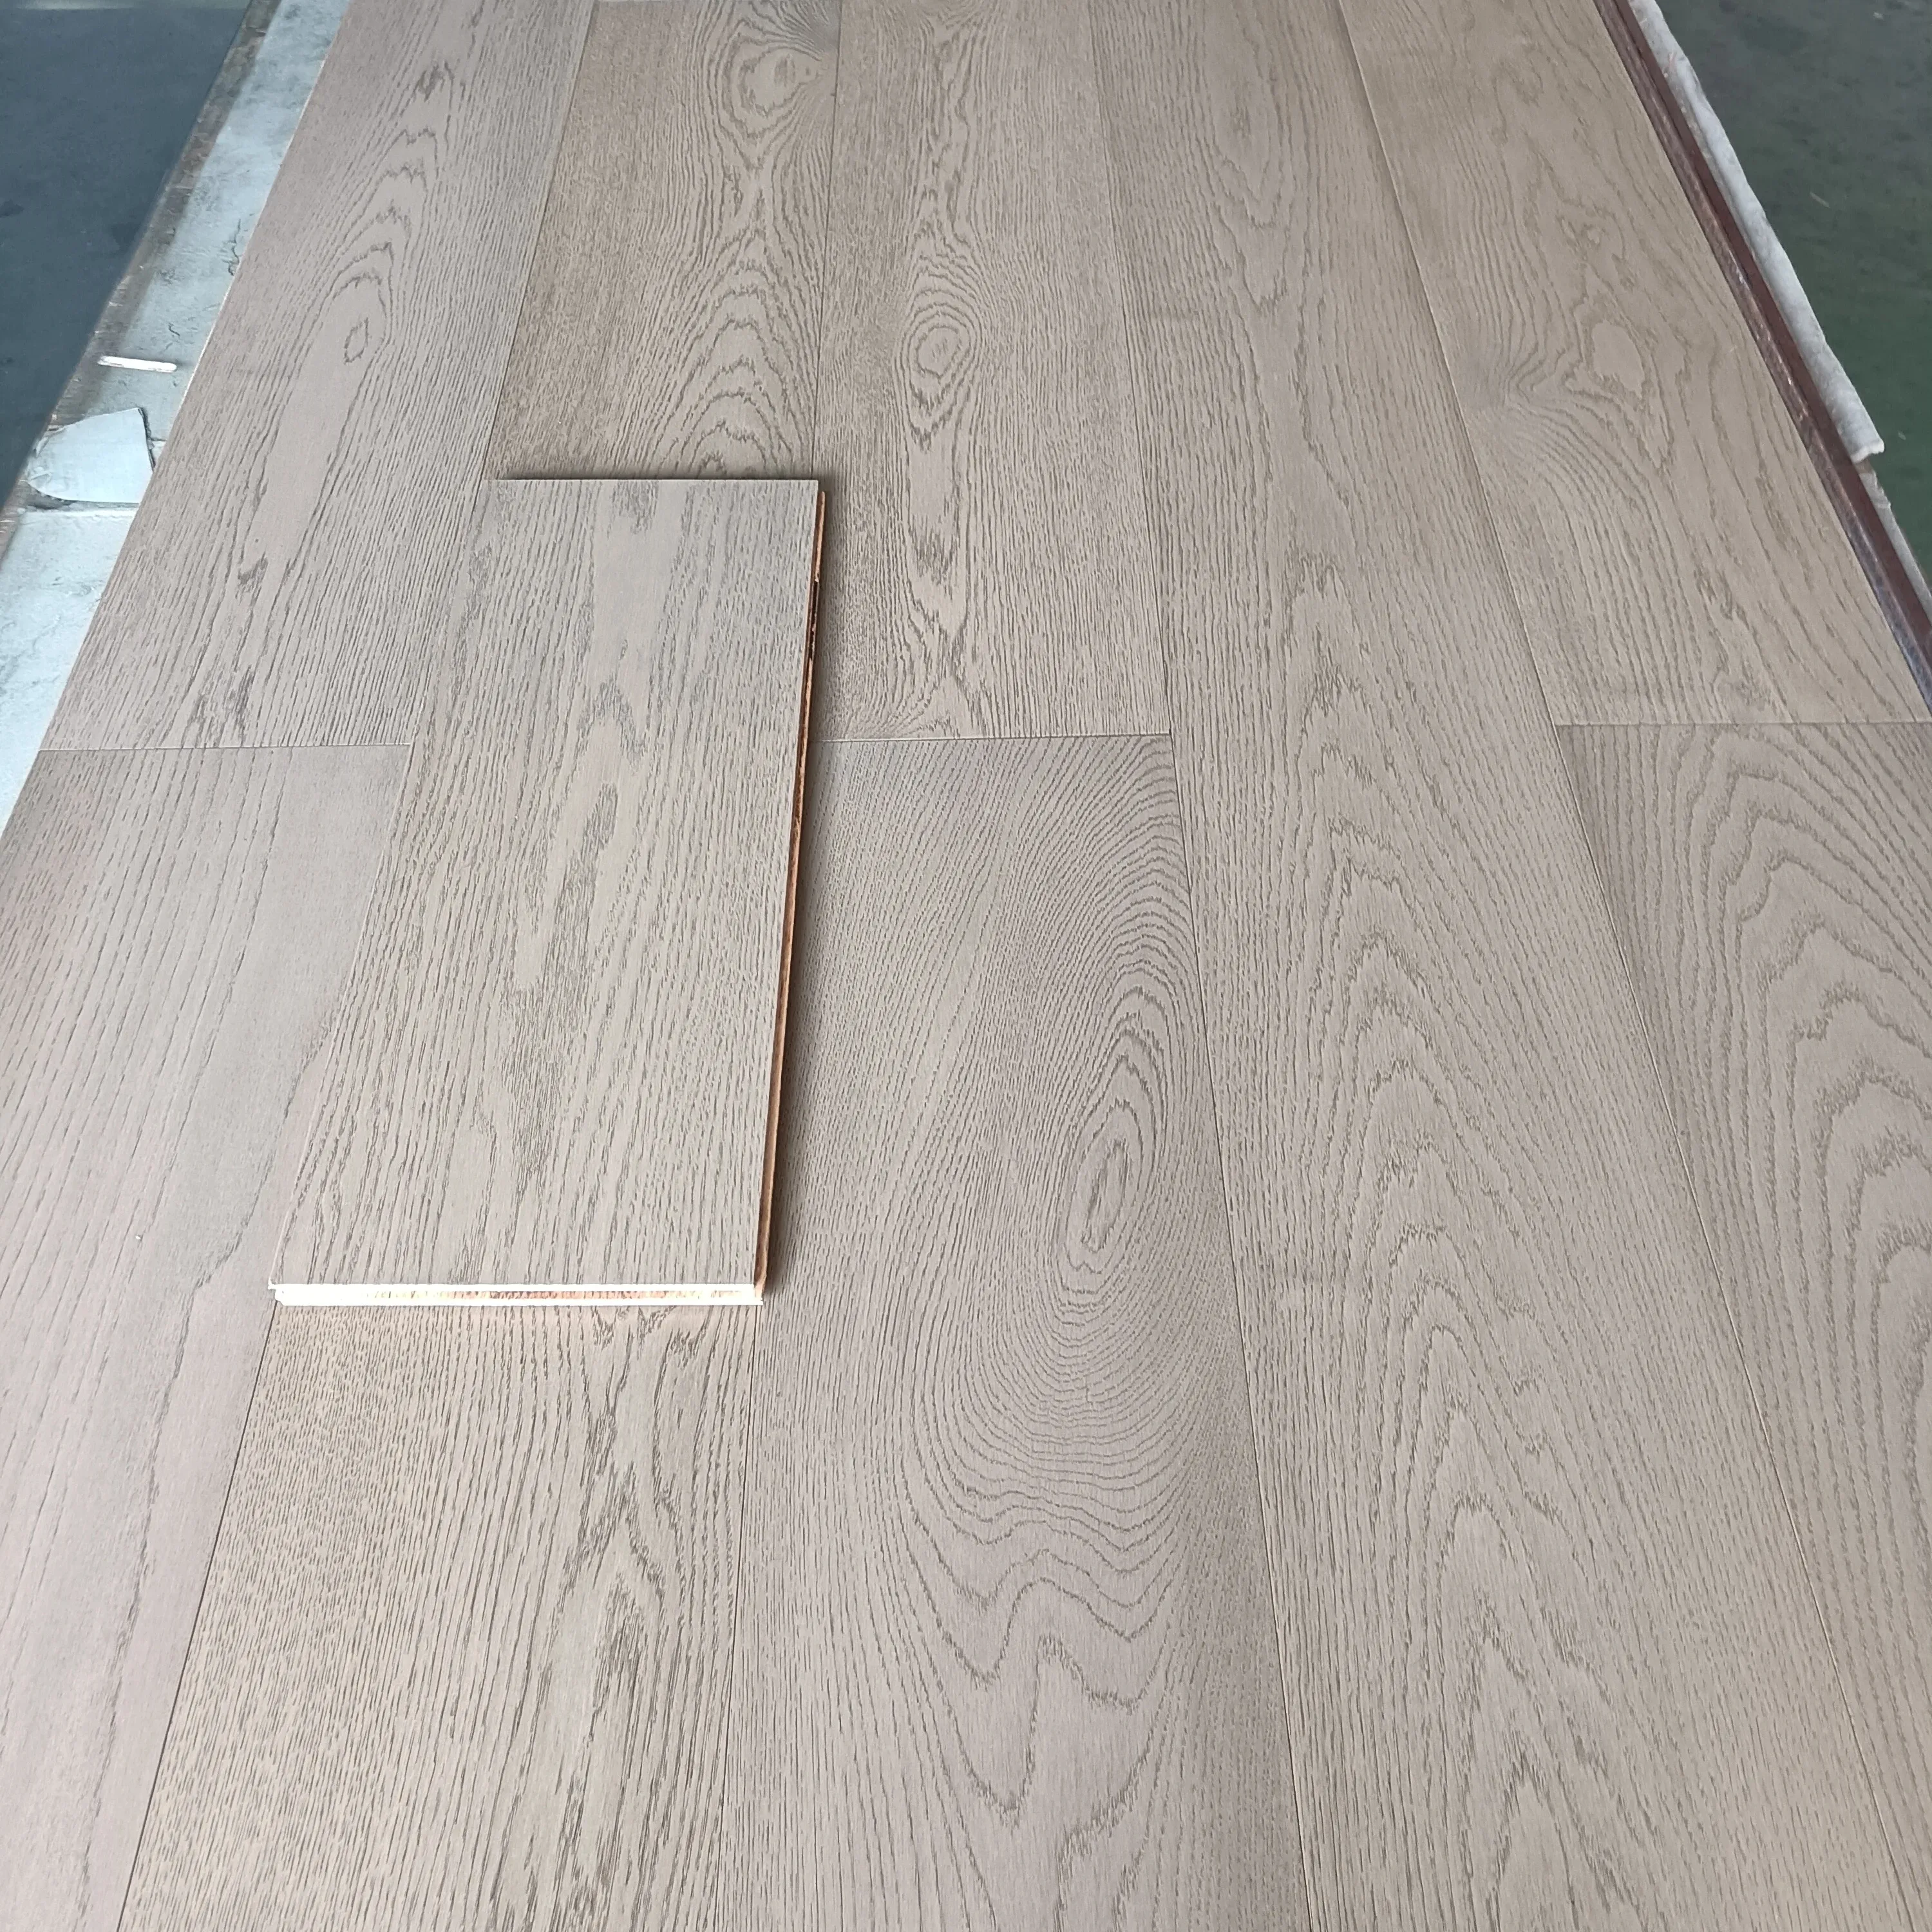 Migliore qualità 9 pollici di ingegneria francese a più strati pavimenti in legno legno di quercia bianca pavimenti in legno